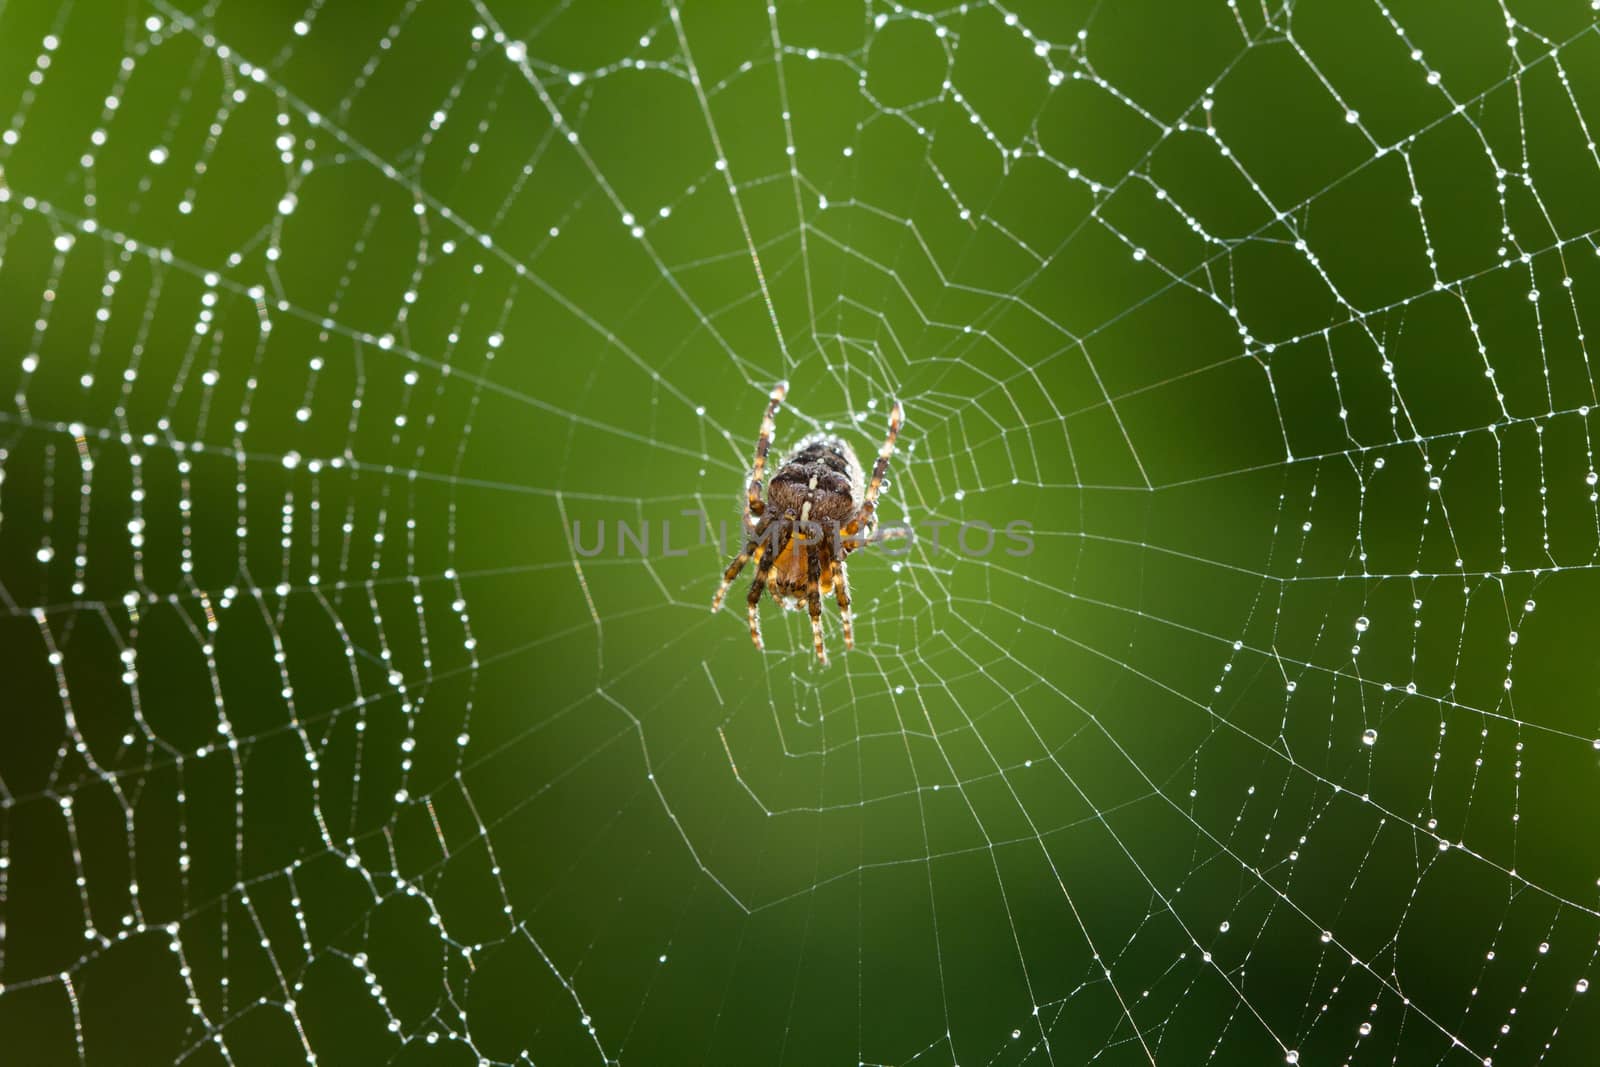 Wet Spider by magicbones